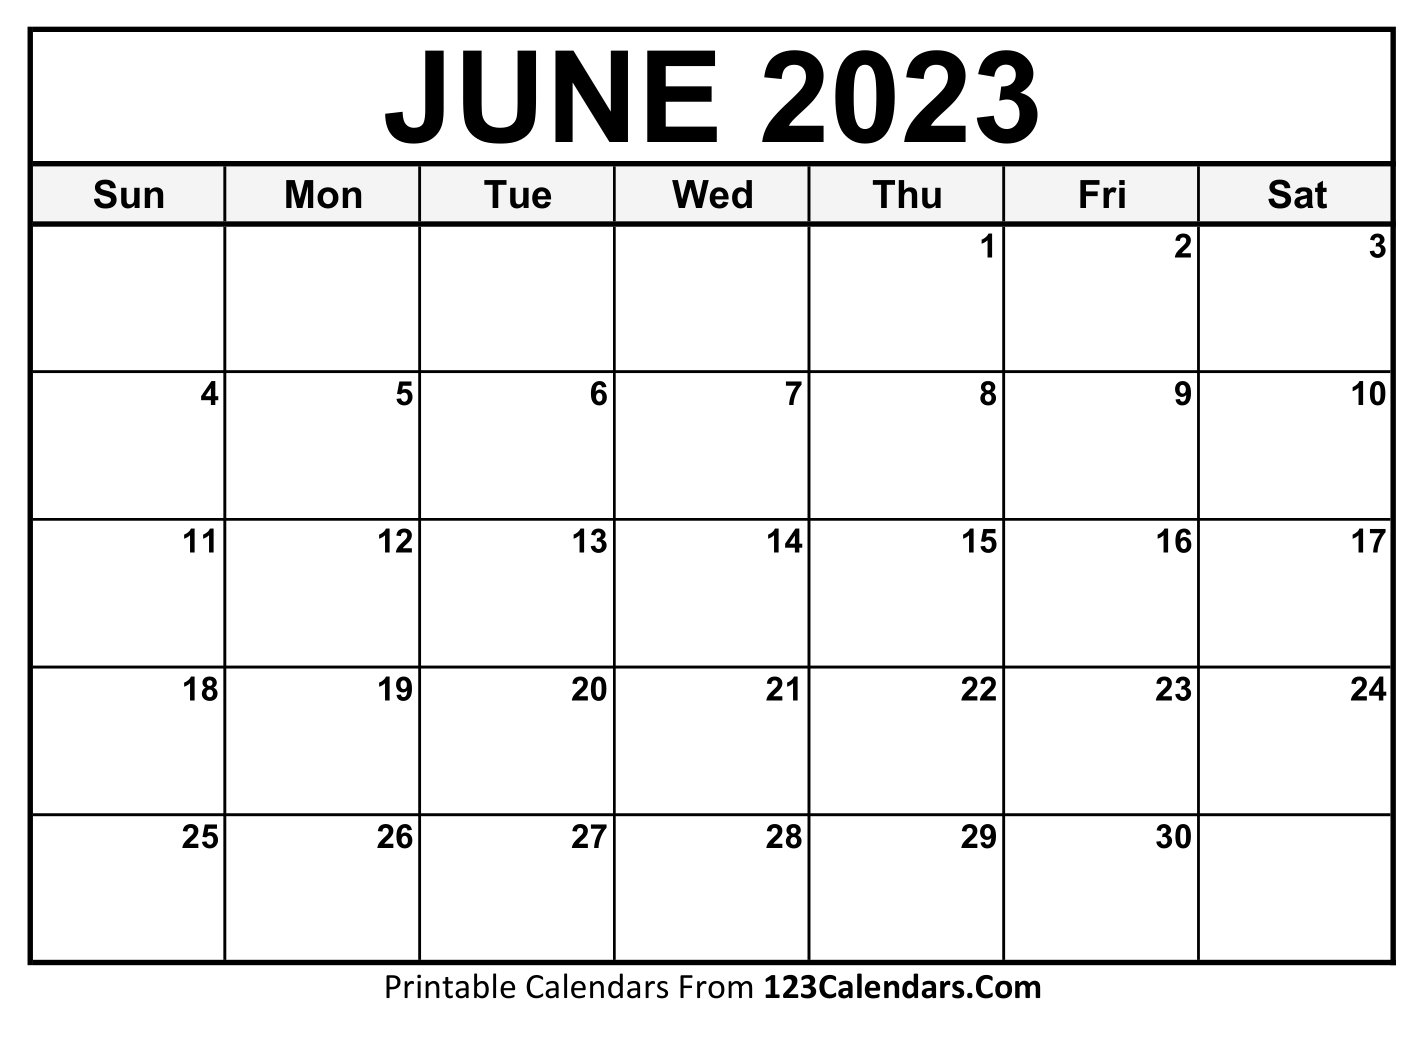 june-2023-calendar-monthly-printable-calendars